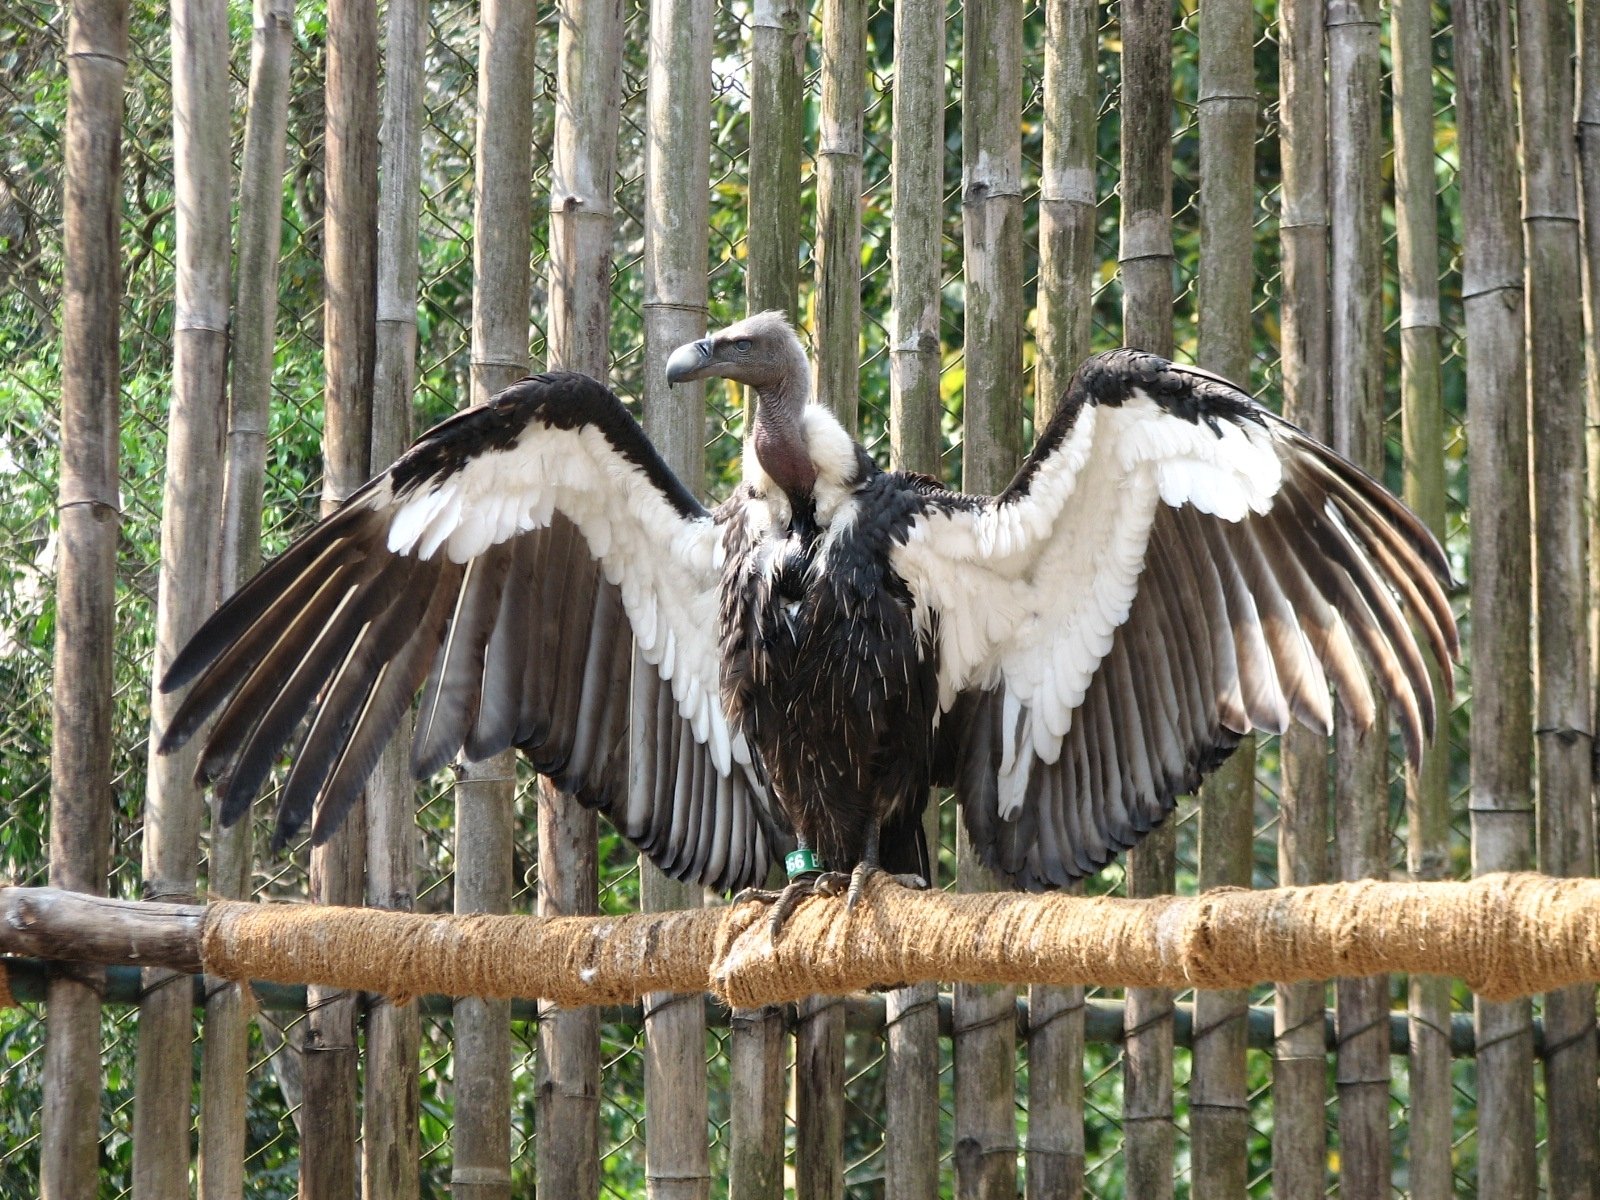 Jatayu(Asian king vulture)